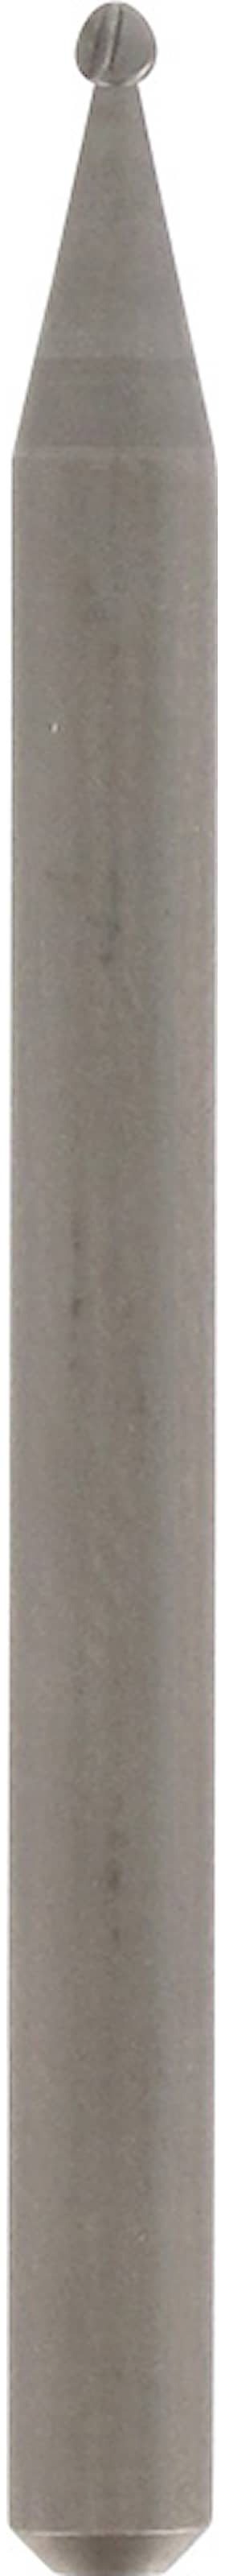 Dremel graverestift 106JA 1,6 mm. 3 stk. pak Graverstift